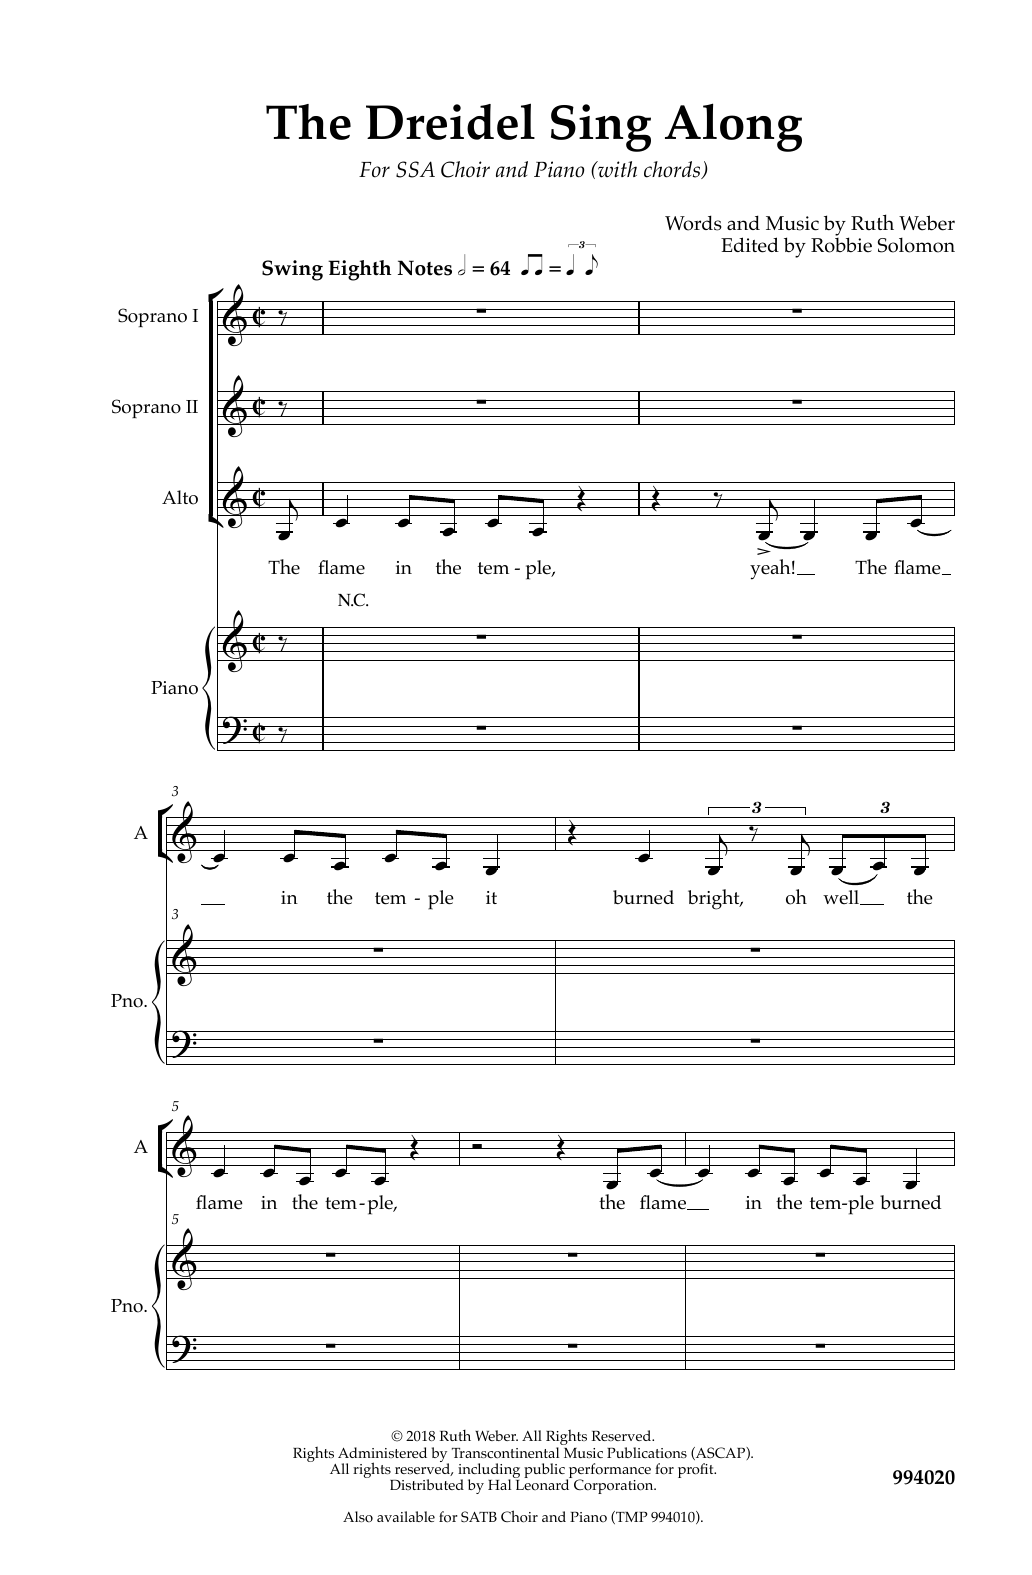 Robbie Solomon Dreidel Sing Along Sheet Music Notes & Chords for SATB Choir - Download or Print PDF